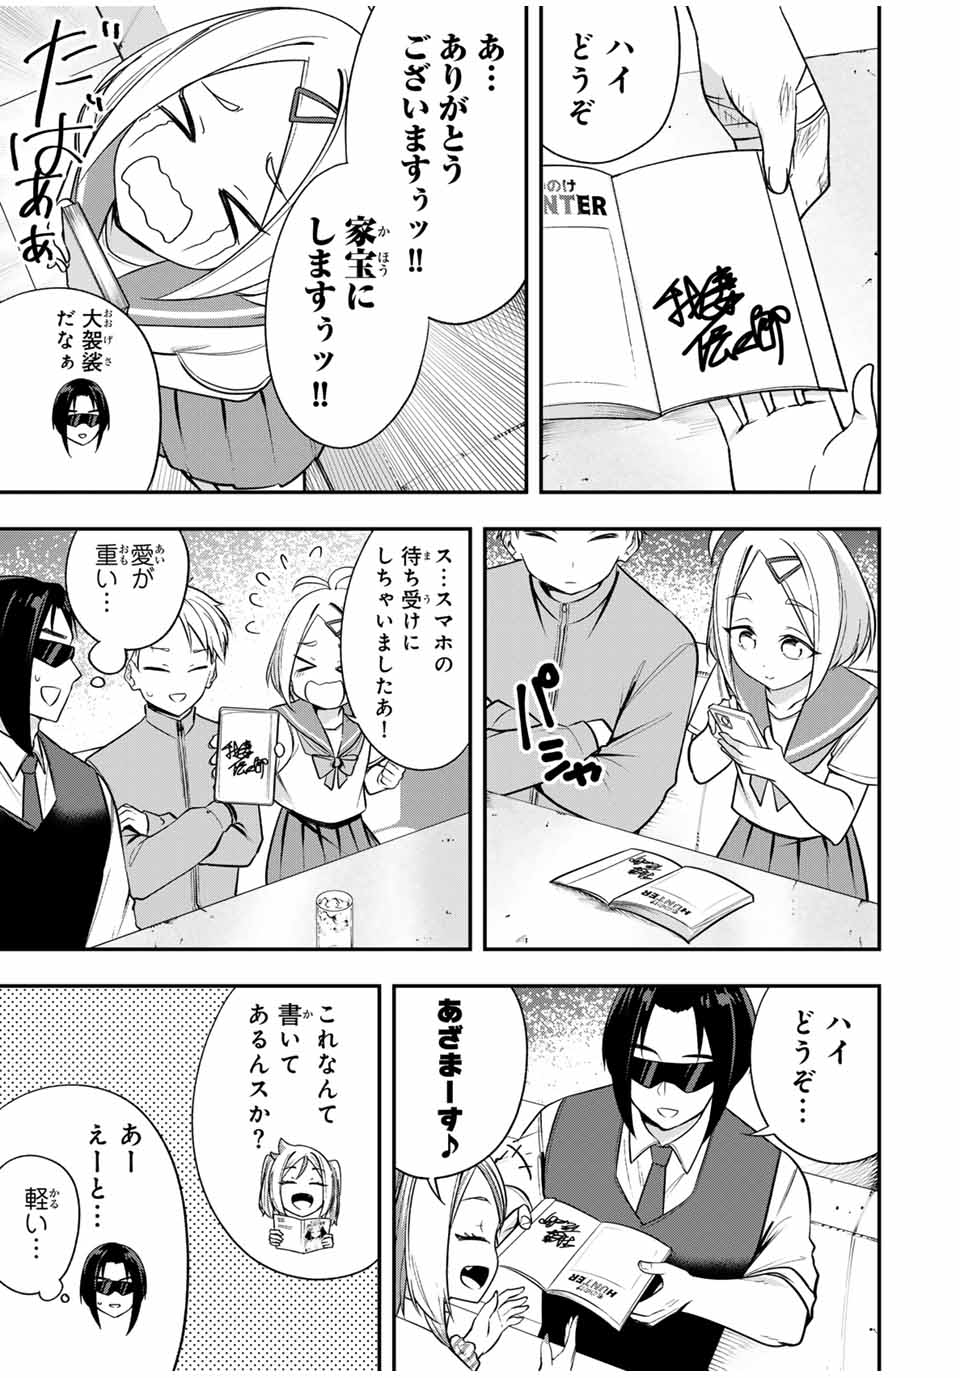 Heroine wa xx Okasegitai - Chapter 12 - Page 11